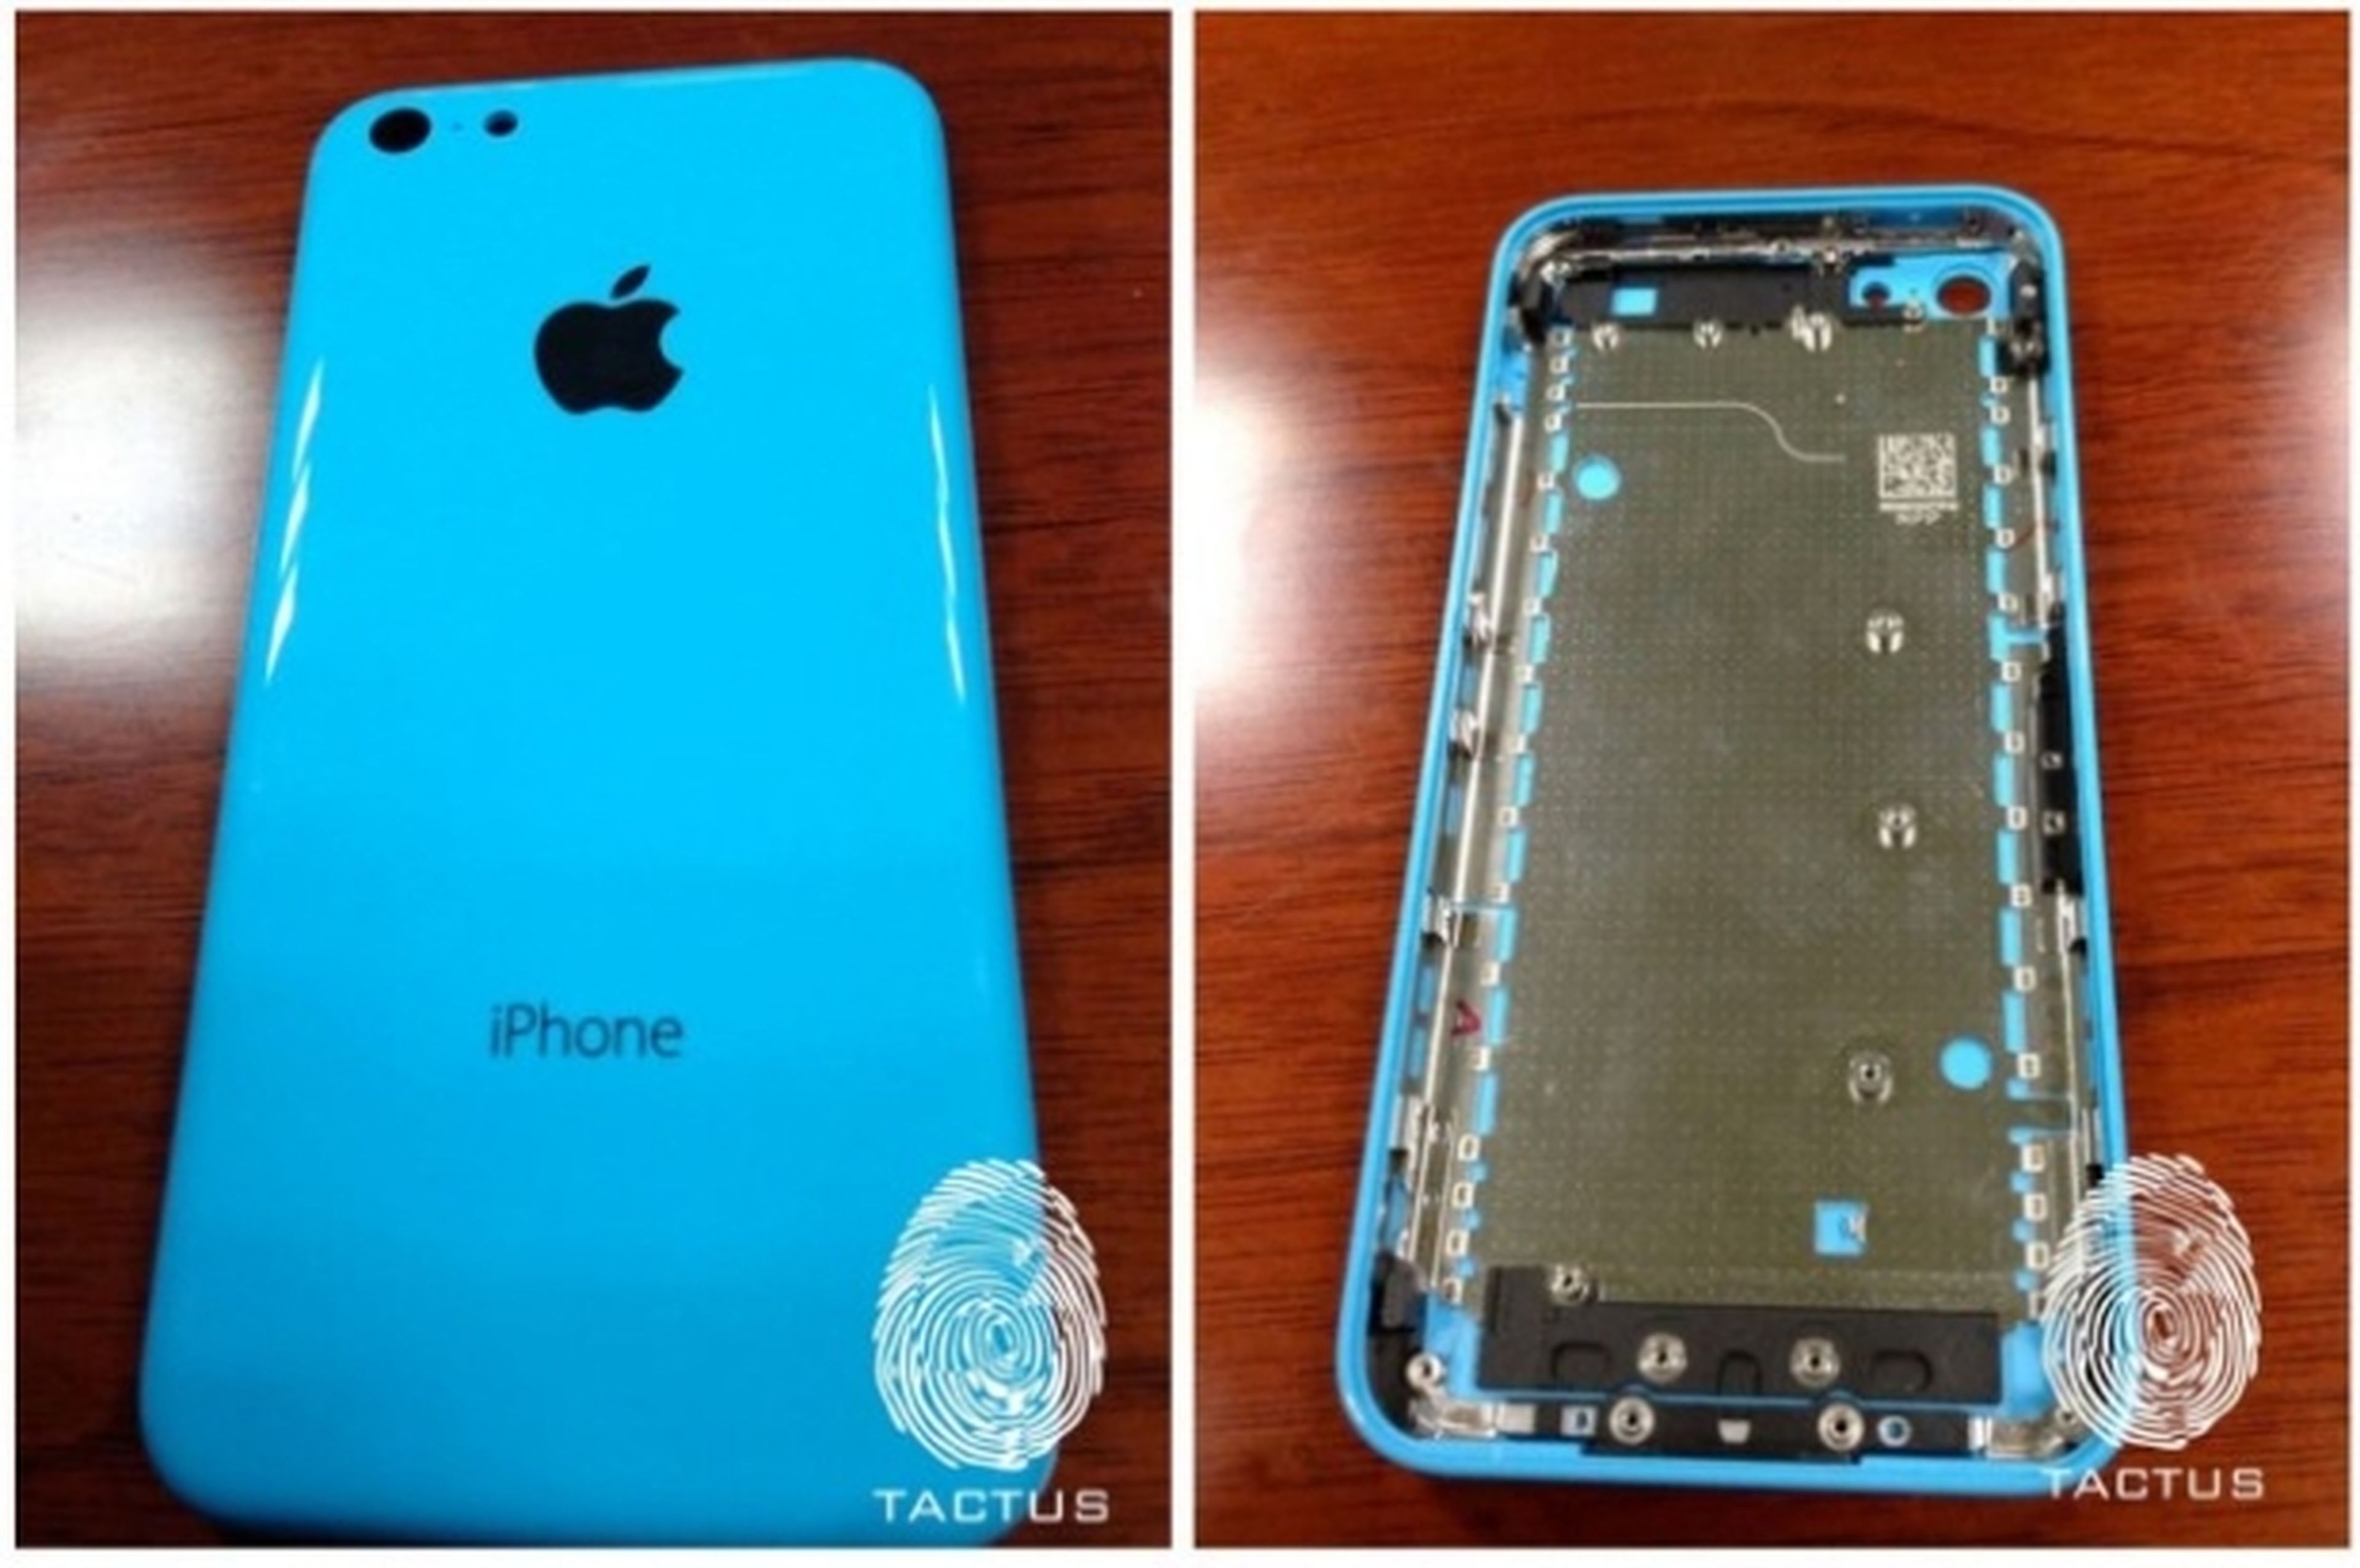 Carcasa de iPhone 5C azul